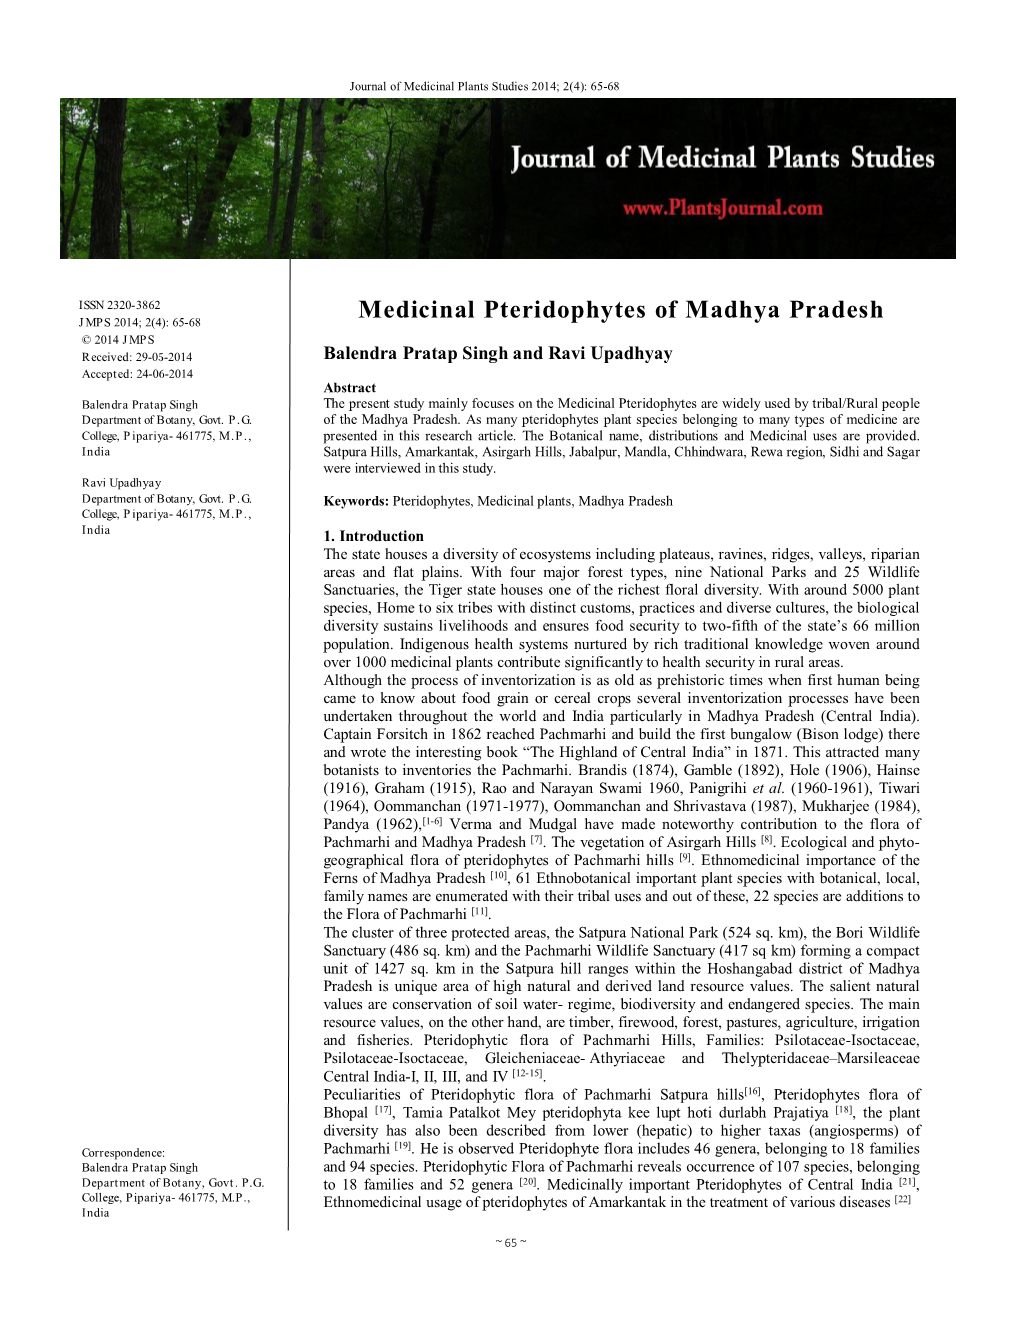 Medicinal Pteridophytes of Madhya Pradesh JMPS 2014; 2(4): 65-68 © 2014 JMPS